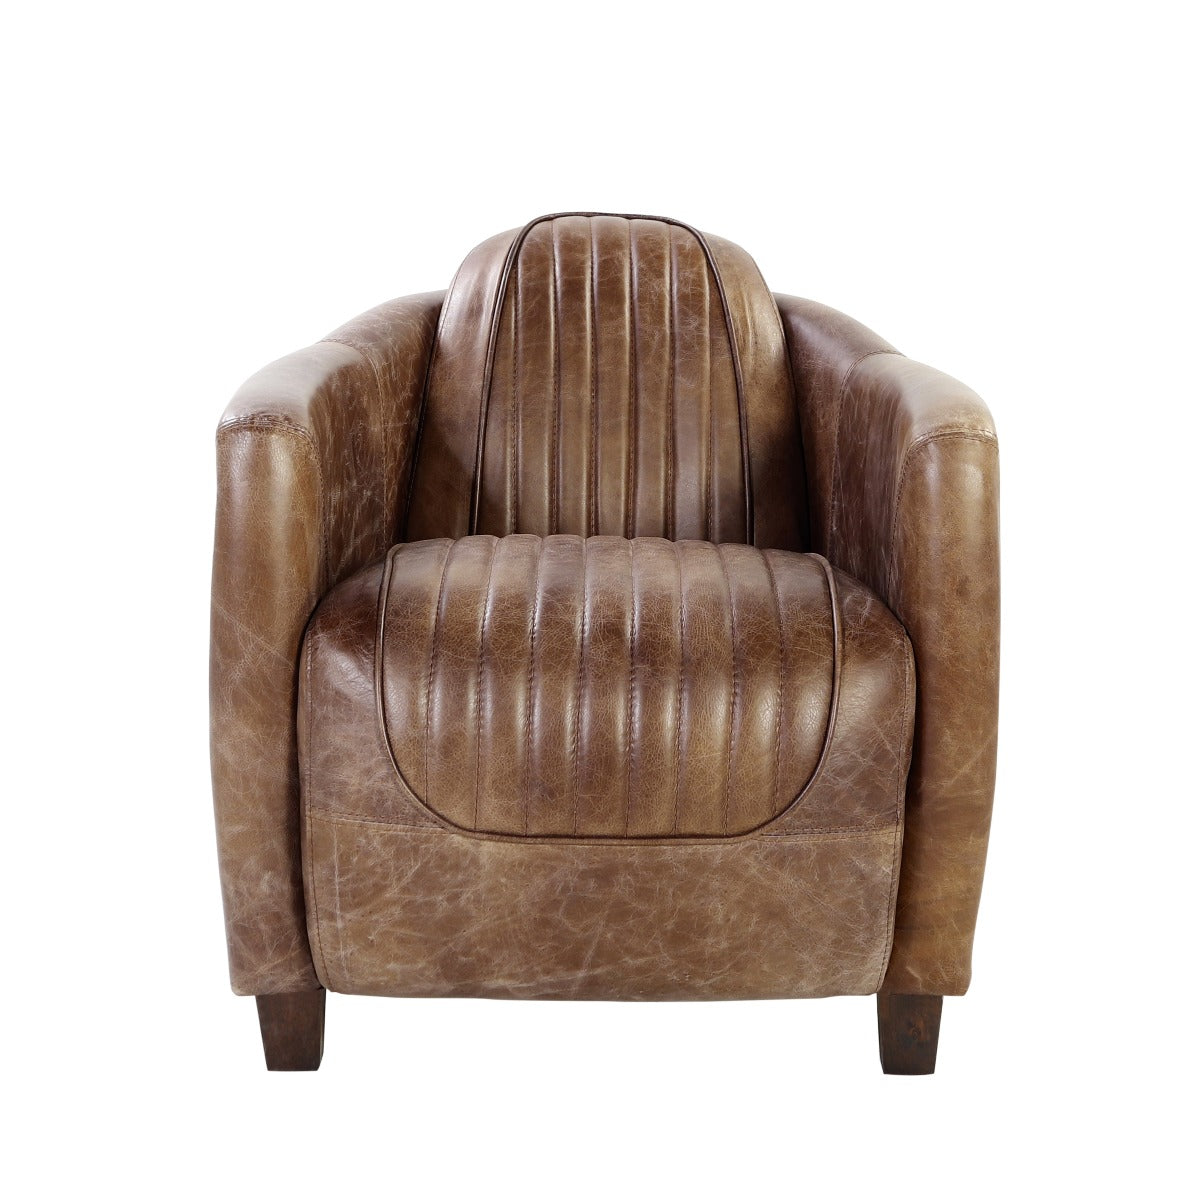 Acme - Brancaster Chair 53547 Retro Brown Top Grain Leather & Aluminum